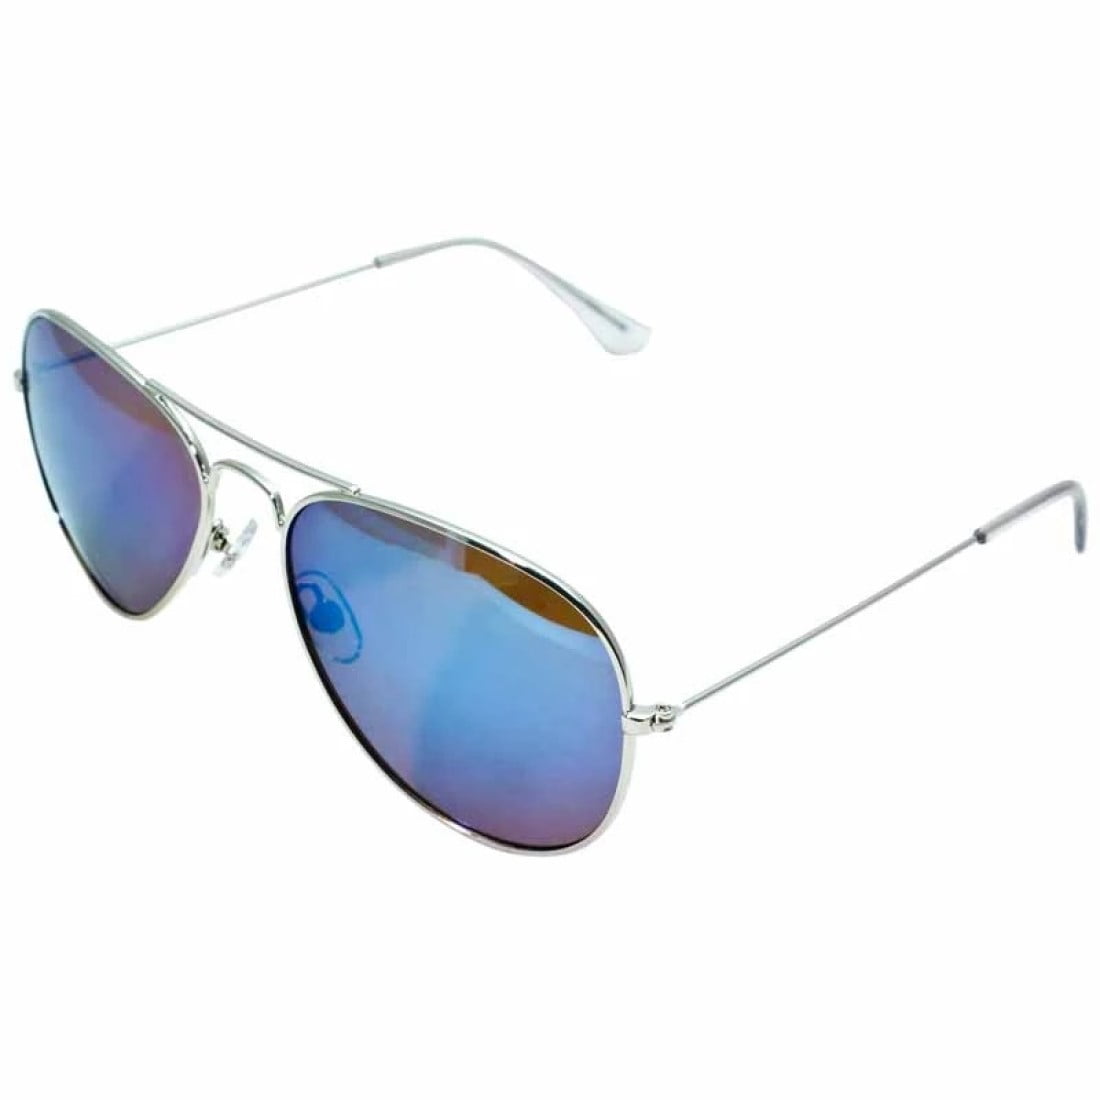 Panama Jack Silver Pilot Aviator Sunglasses (Blue Mirror) - Walmart.com